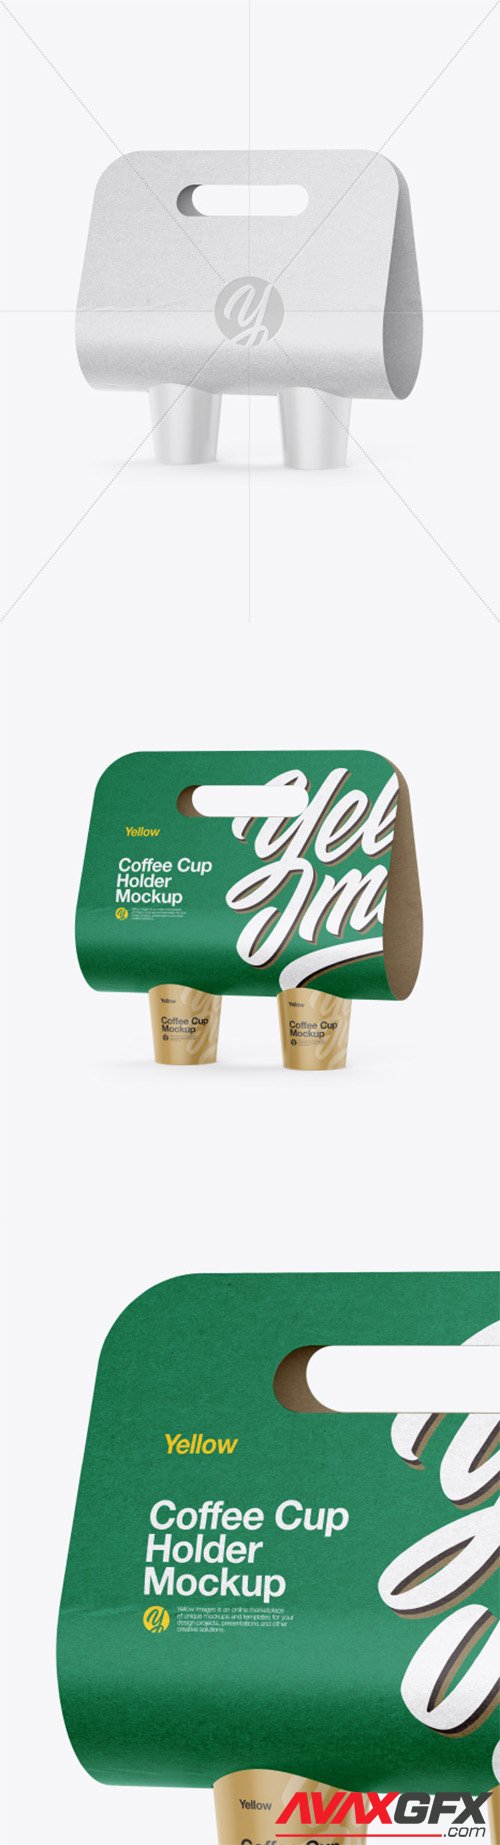 Coffee Cups Holder Mockup - Half Side View 33530